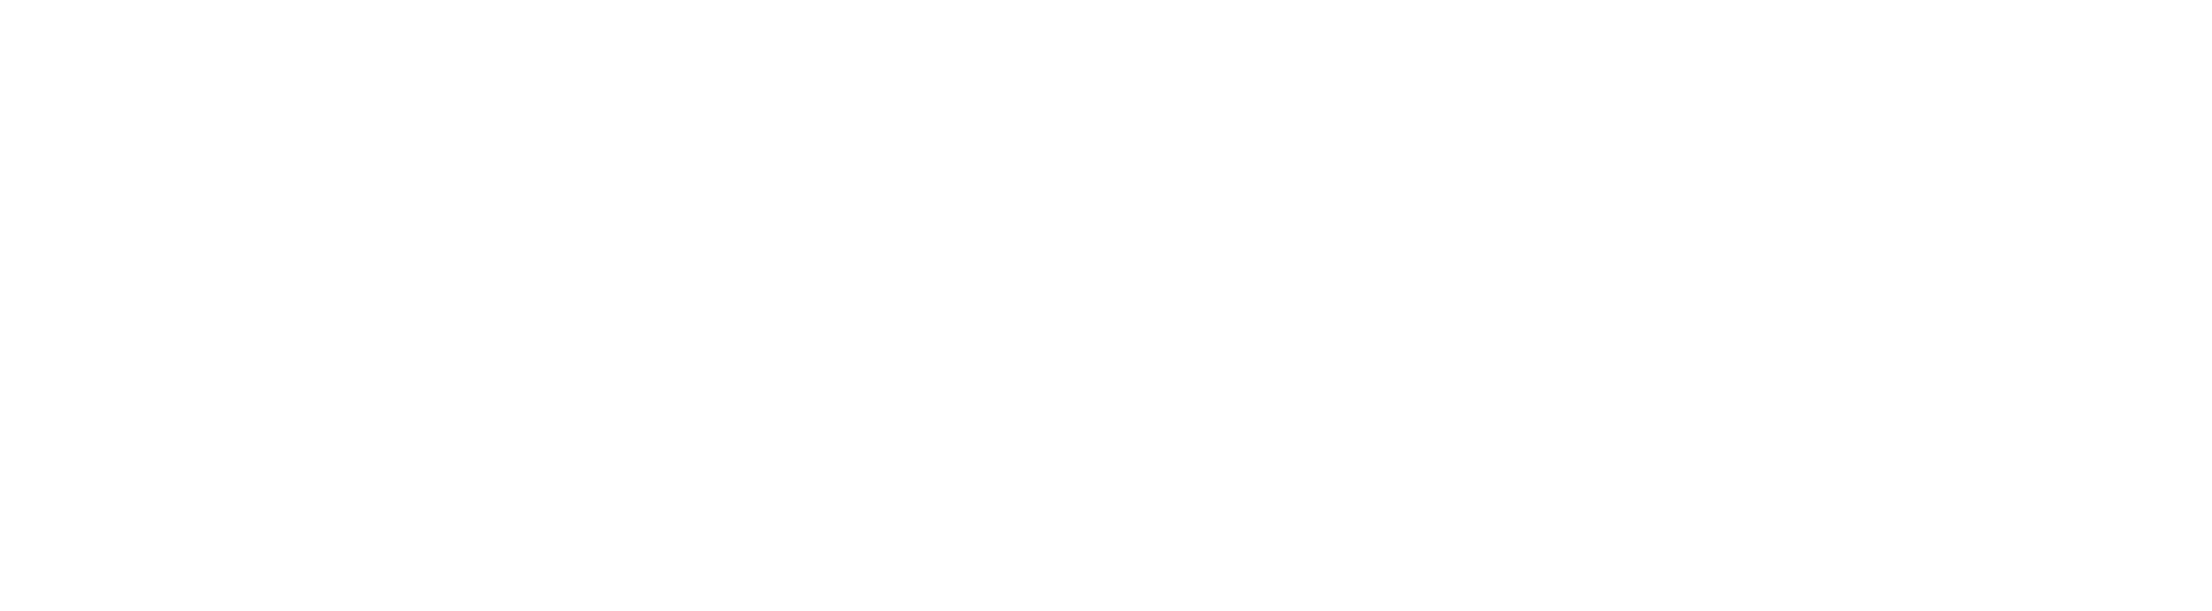 Morocco Nomads